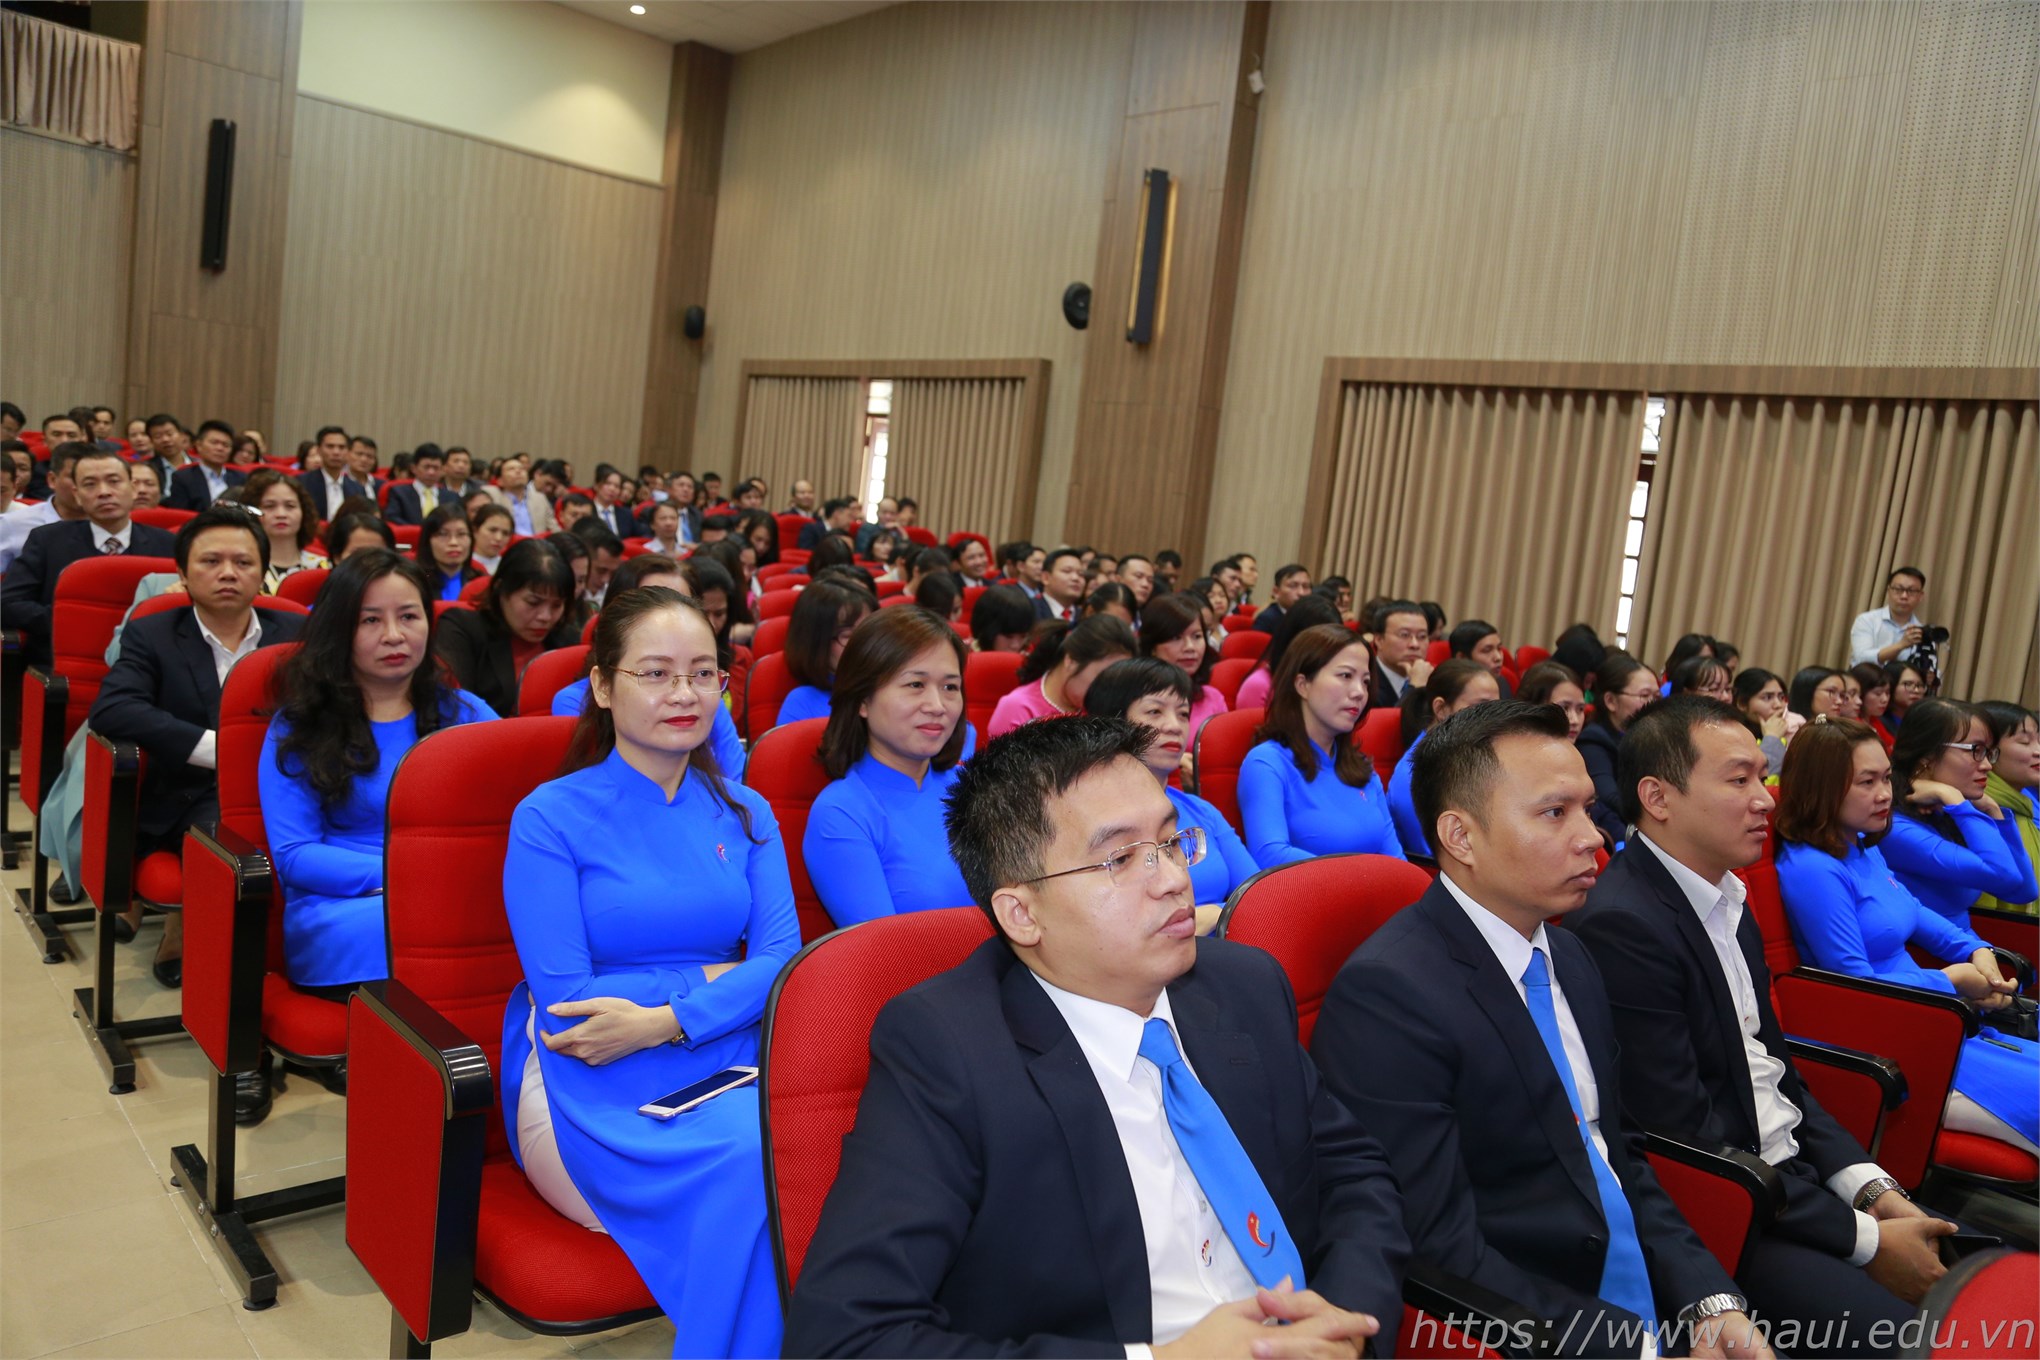 Meeting marks Vietnamese Teachers' Day 